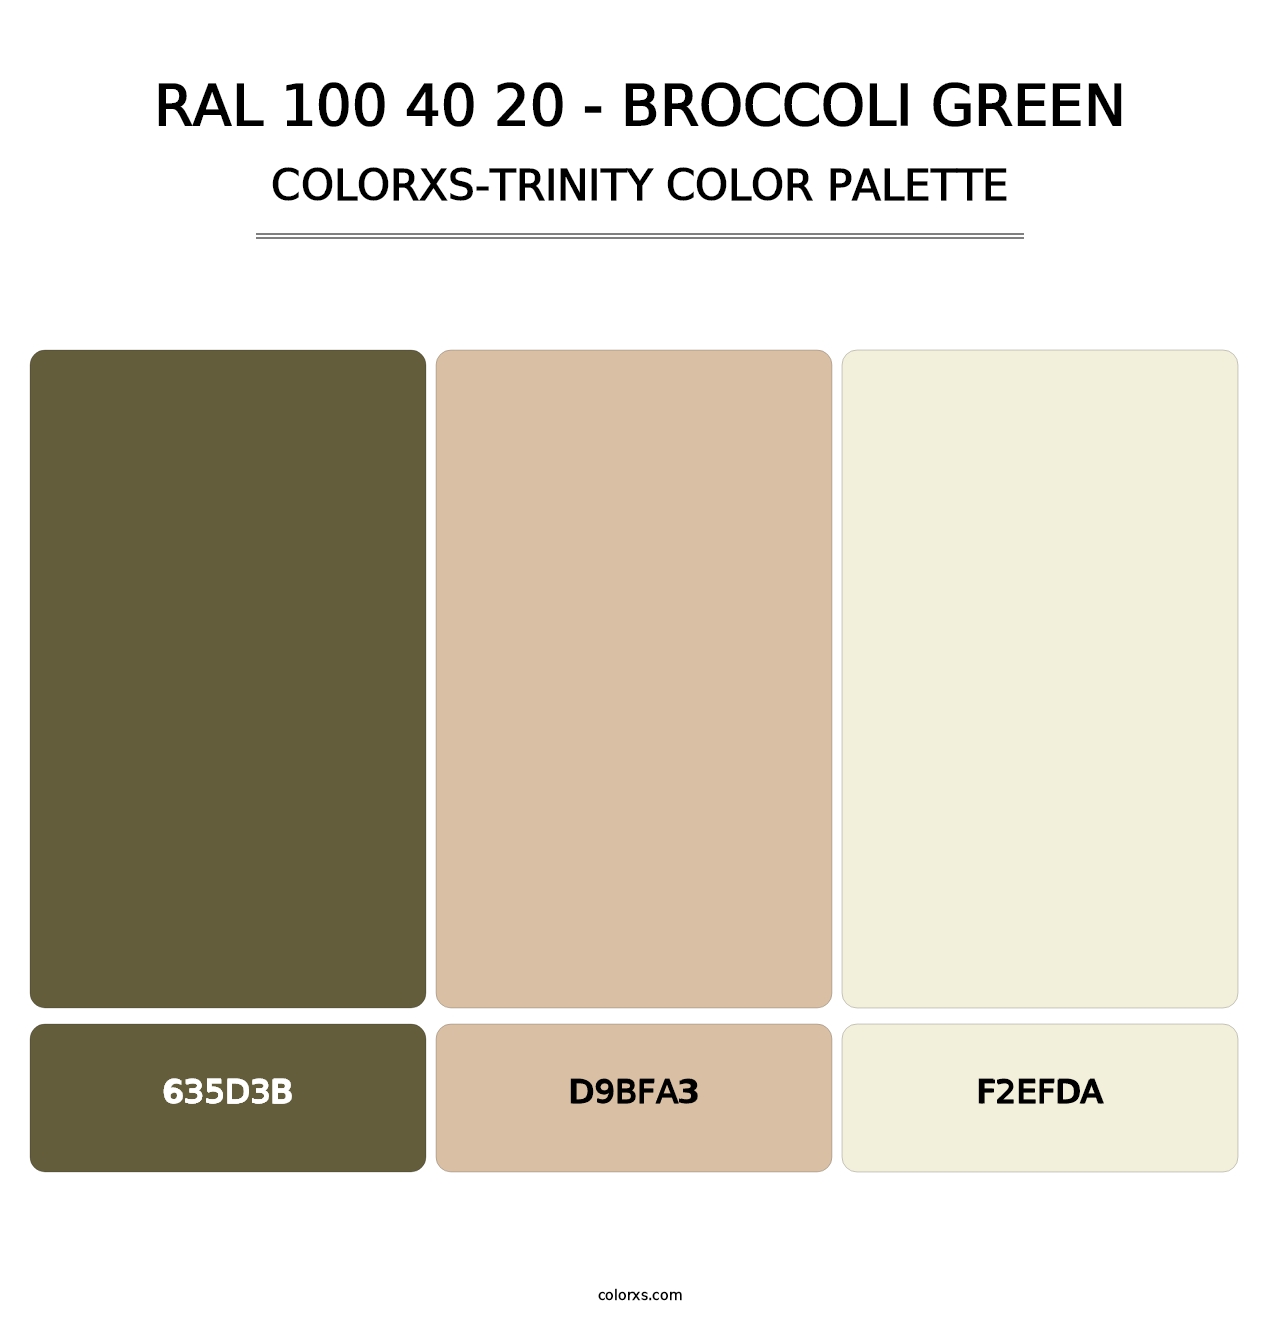 RAL 100 40 20 - Broccoli Green - Colorxs Trinity Palette